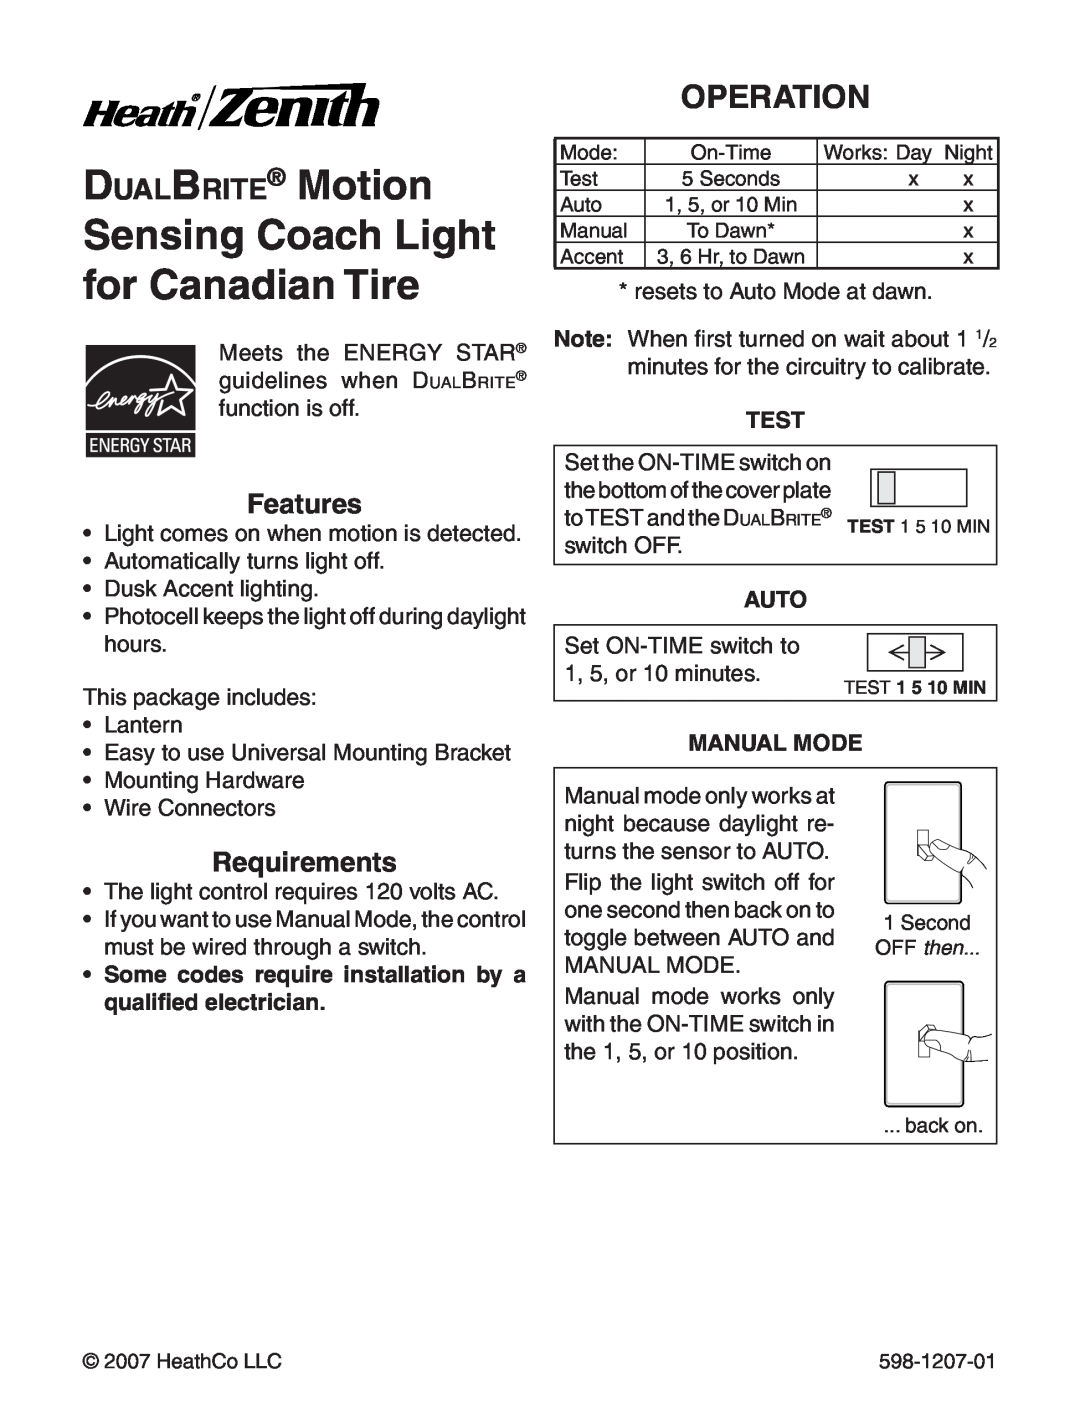 Heath Zenith Motion Sensing Coach Lights manual DualBrite Motion, Sensing Coach Light for Canadian Tire, Operation, Test 